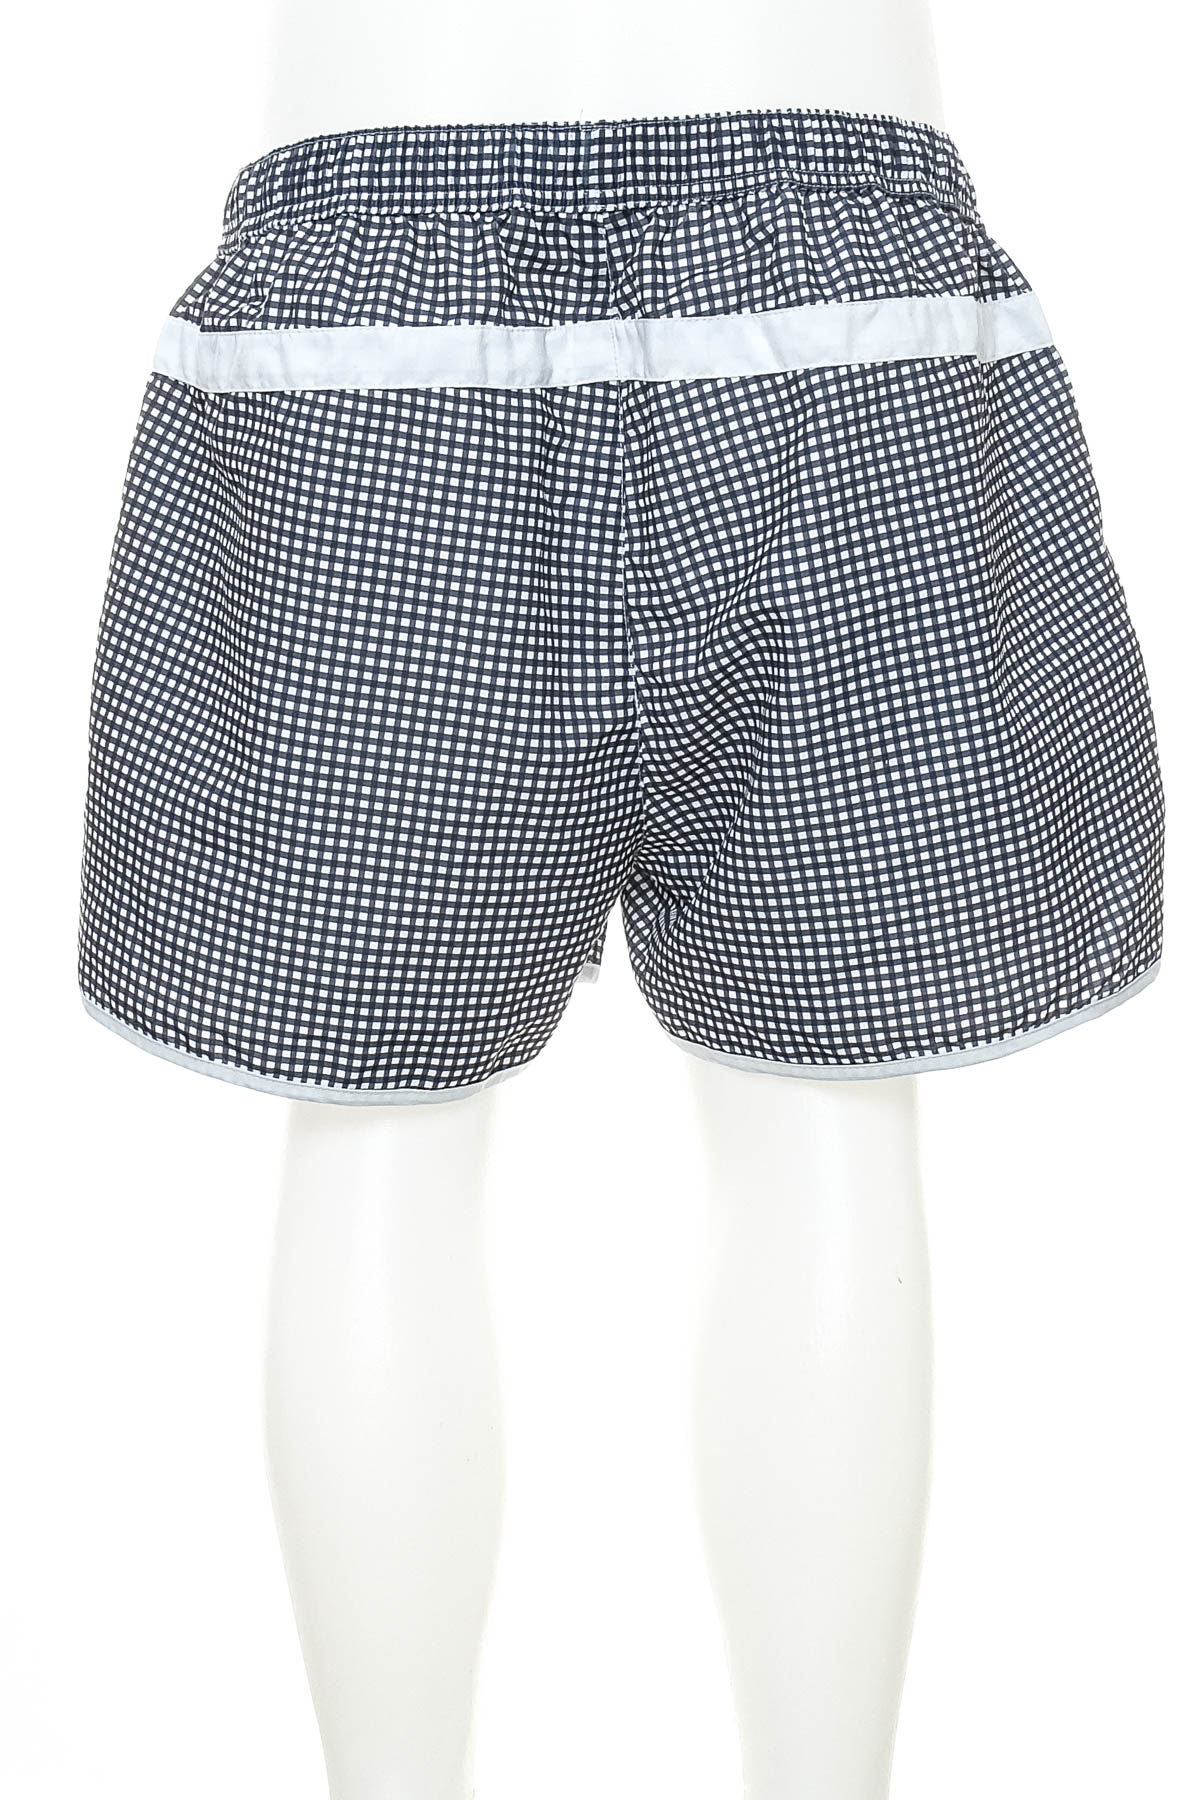 Men's shorts - Bpc Bonprix Collection - 1